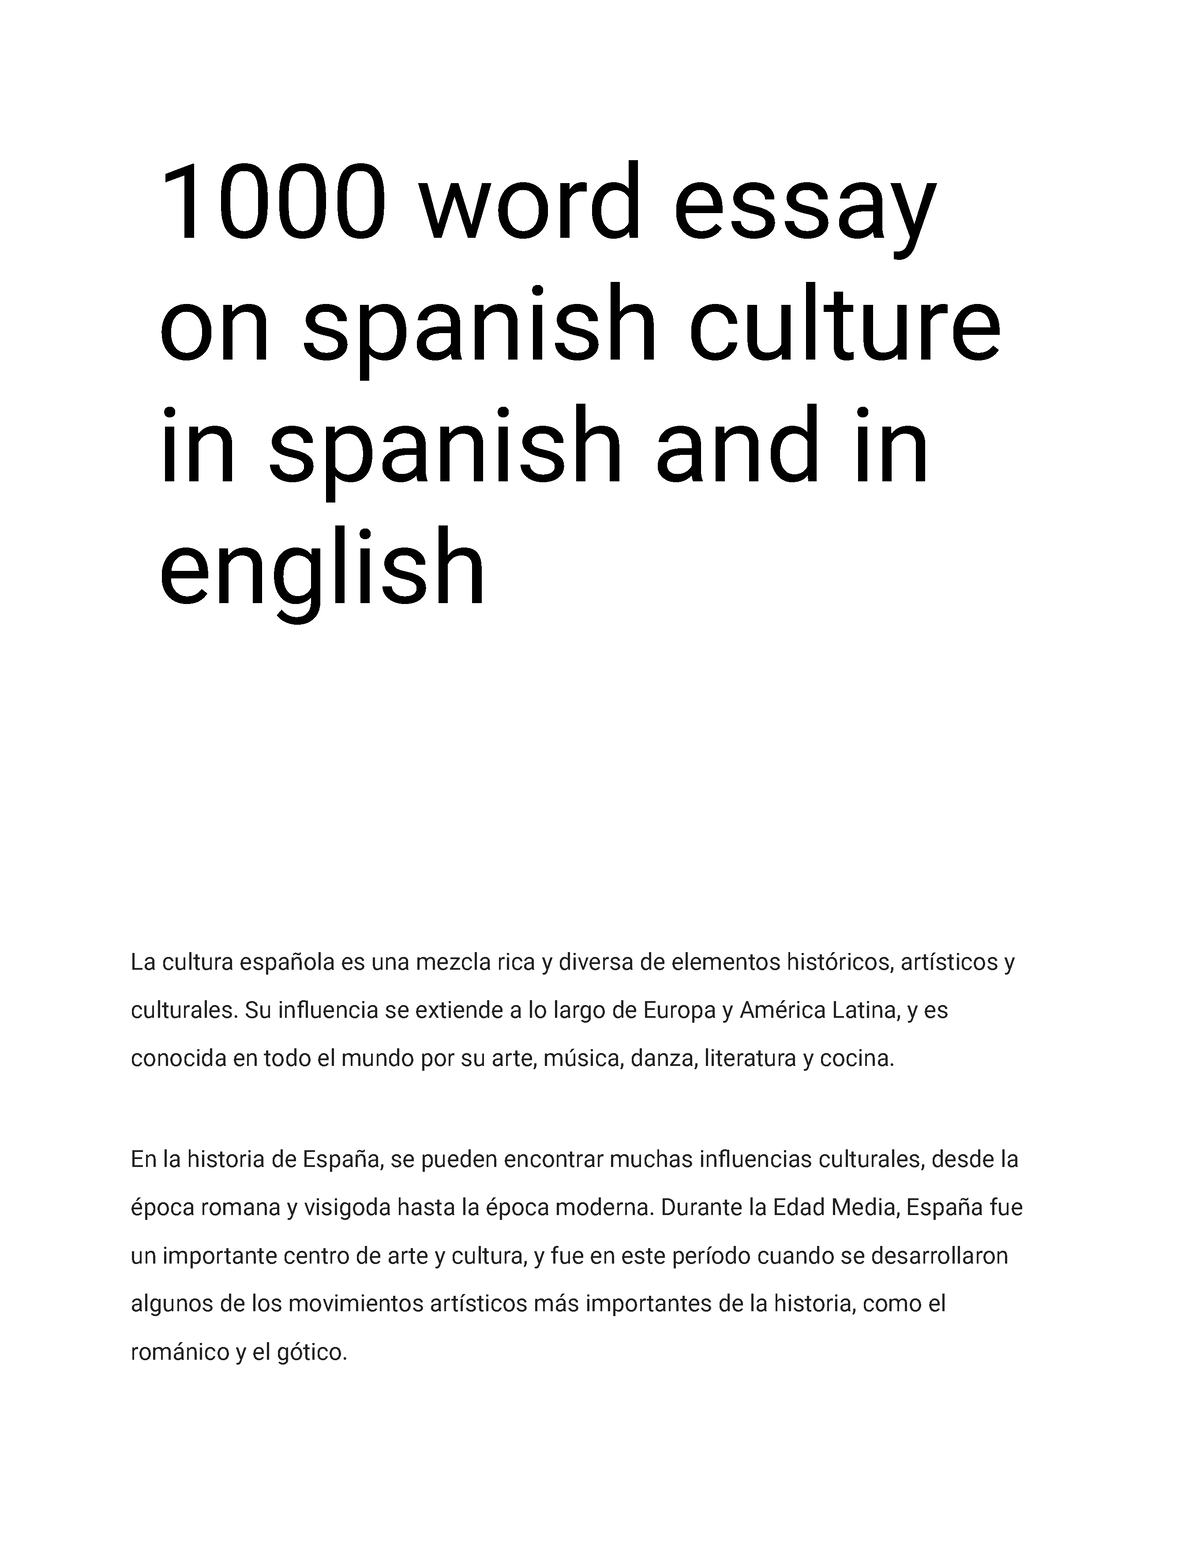 100 word essay in spanish